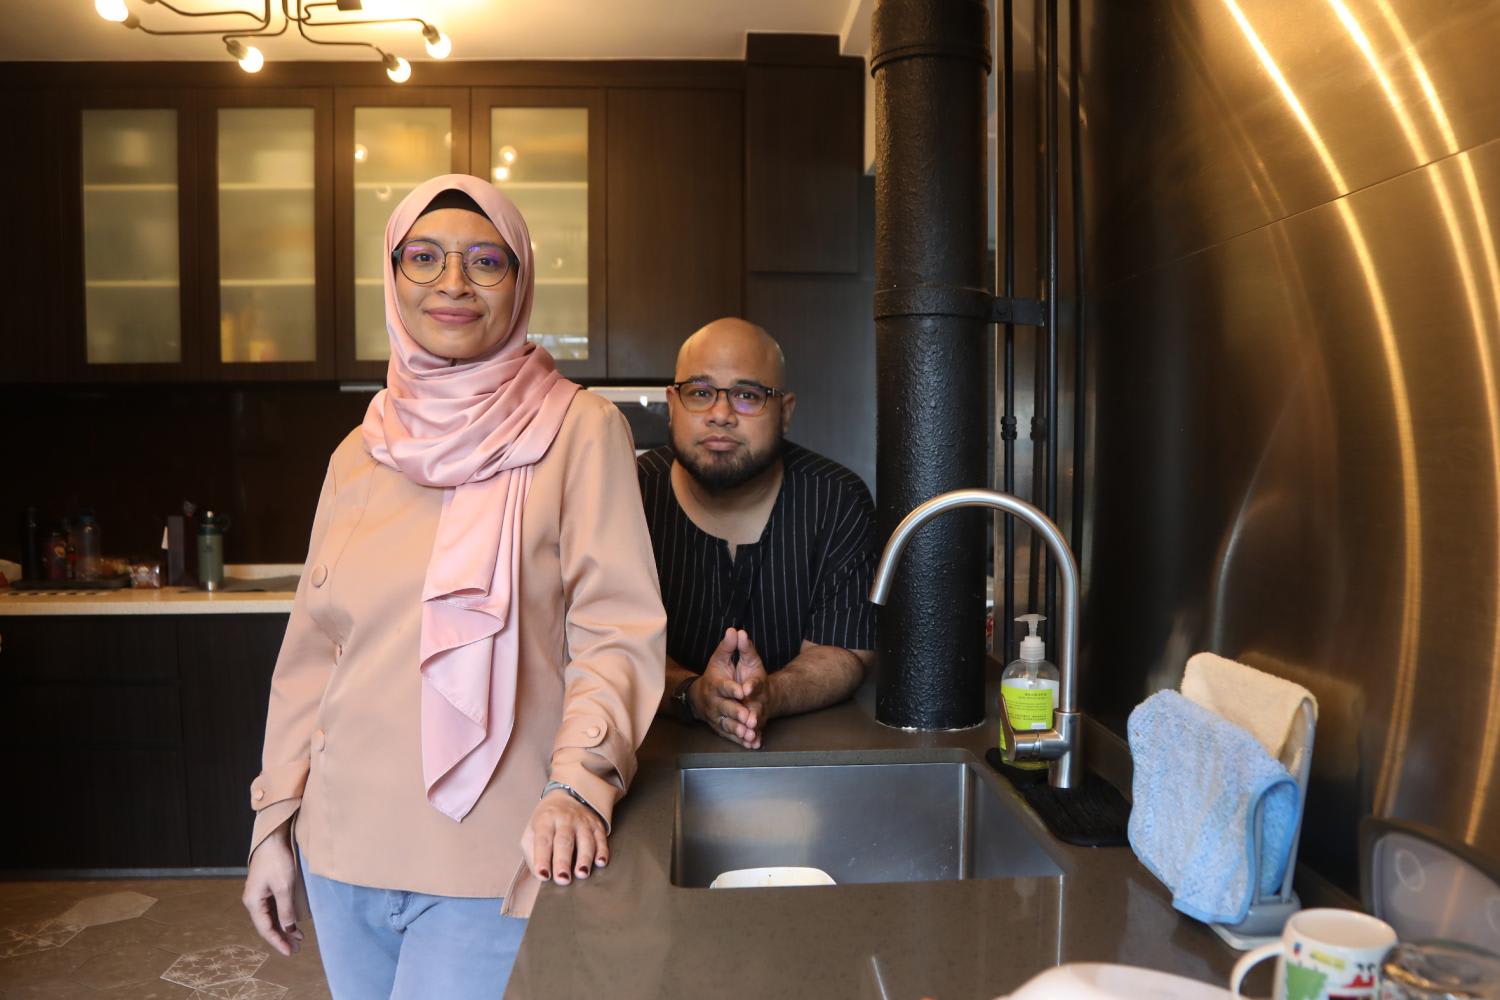 Masrina Abu Bakar is the main breadwinner in the family while her husband Saiful Amri is a stay-at-home husband.